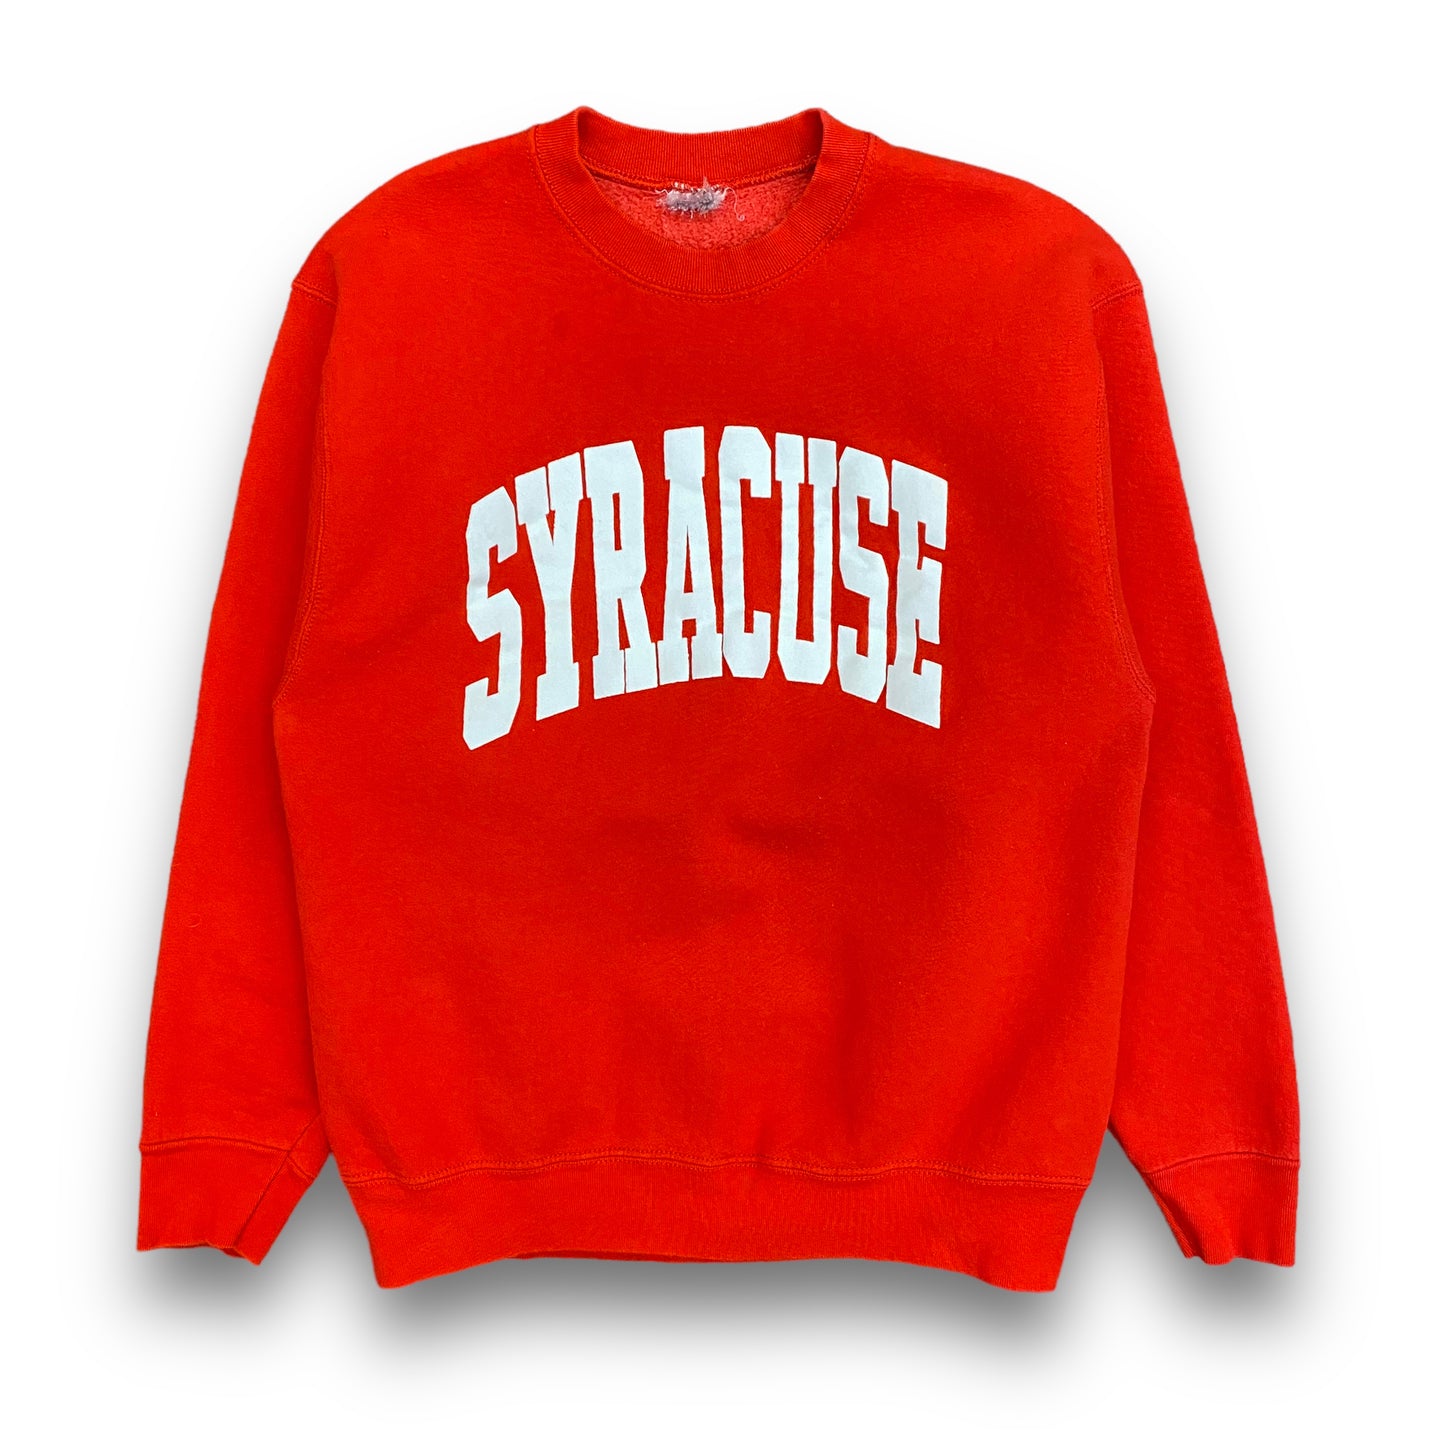 1990s Red "Syracuse" Crewneck Sweatshirt - Size Medium